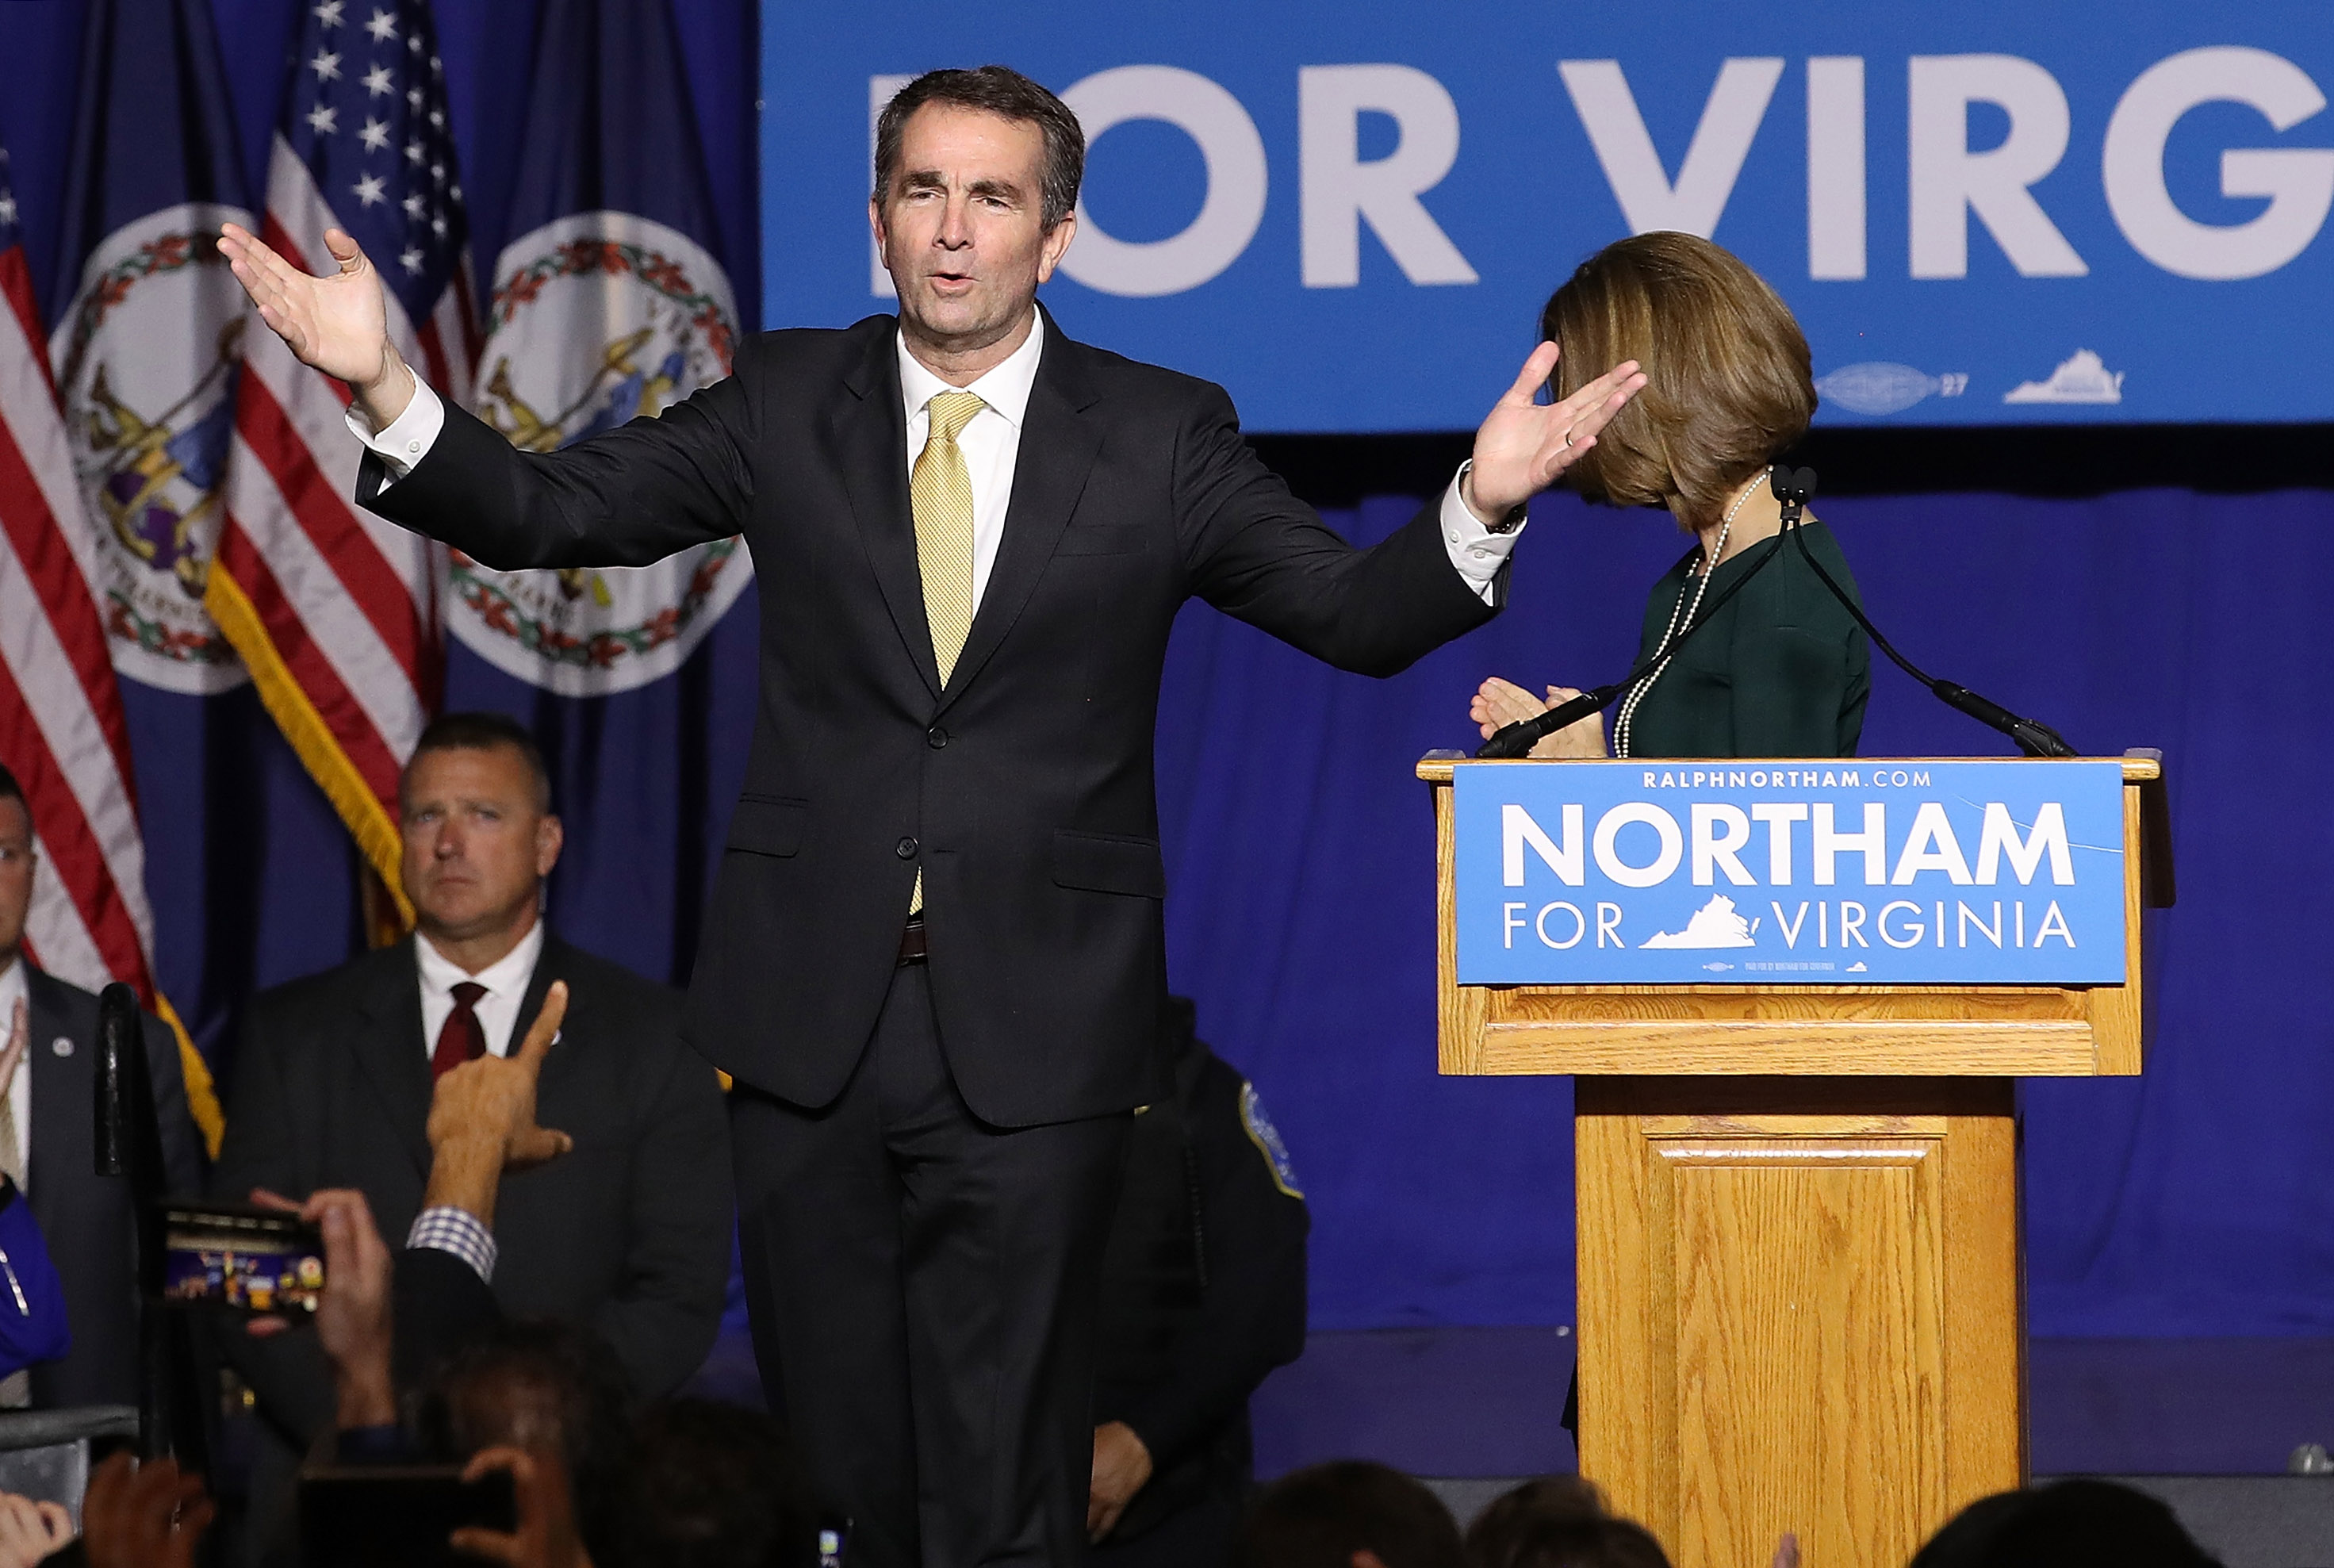 Virginia Governor-elect Ralph Northam